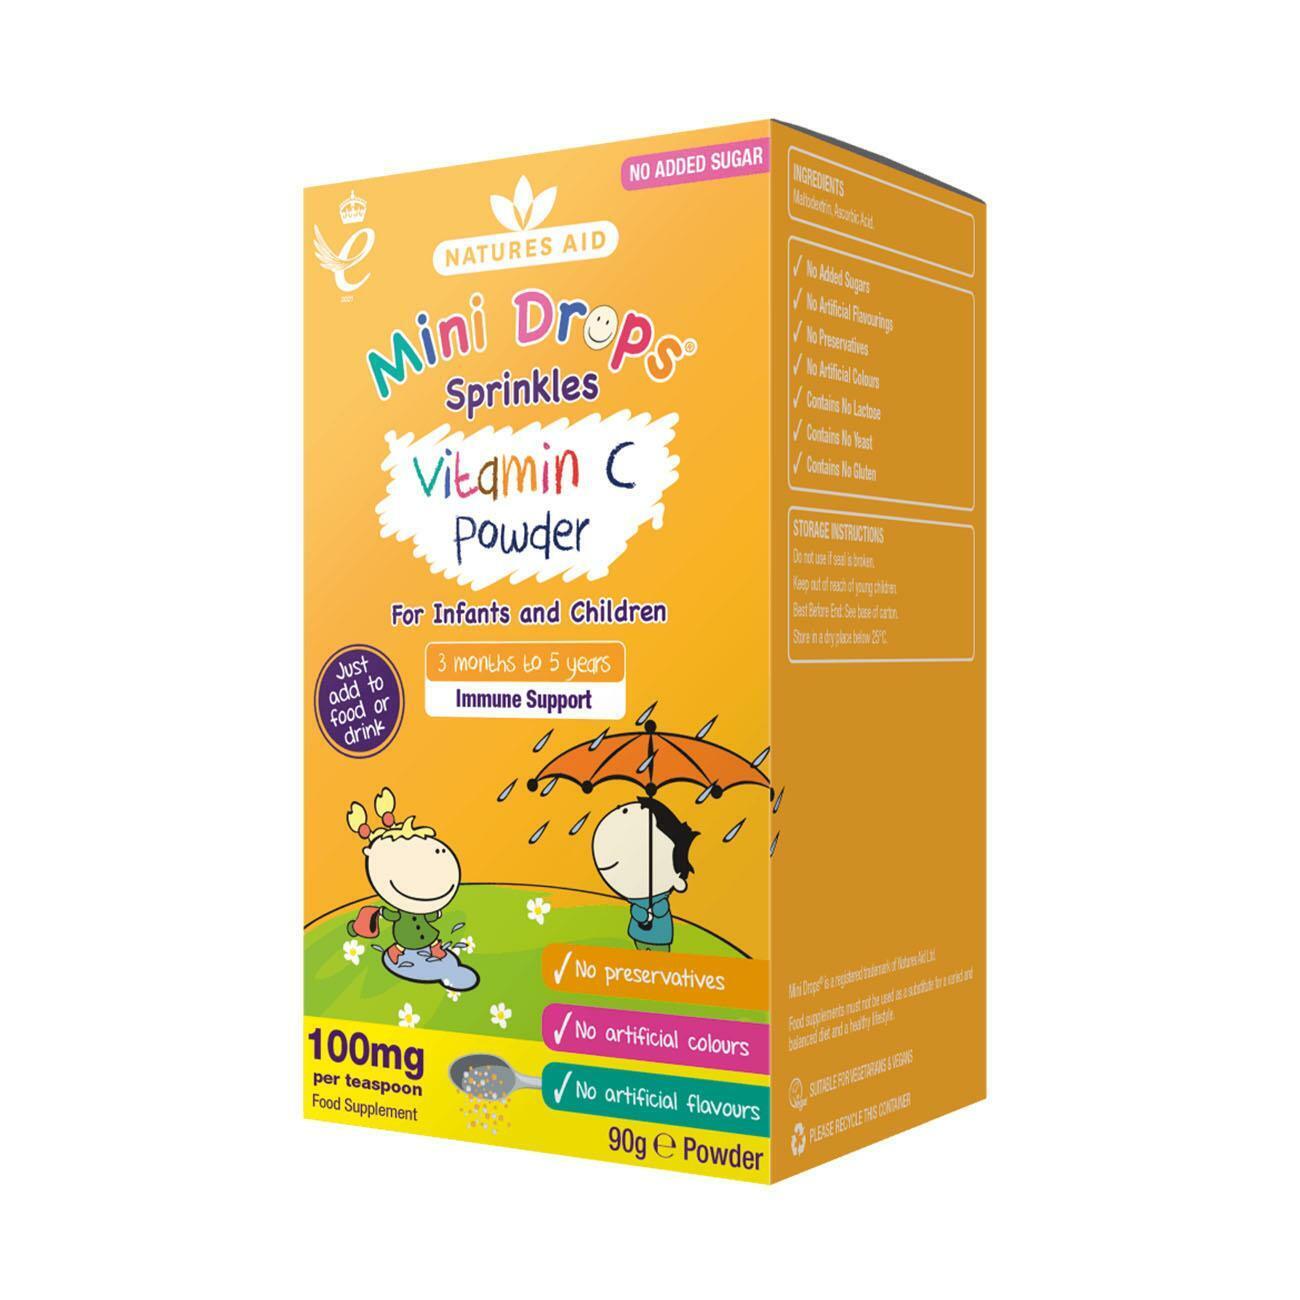 Natures Aid Mini Drops Sprinkles Vitamin C Powder 90g RRP 6.95 CLEARANCE XL 4.99